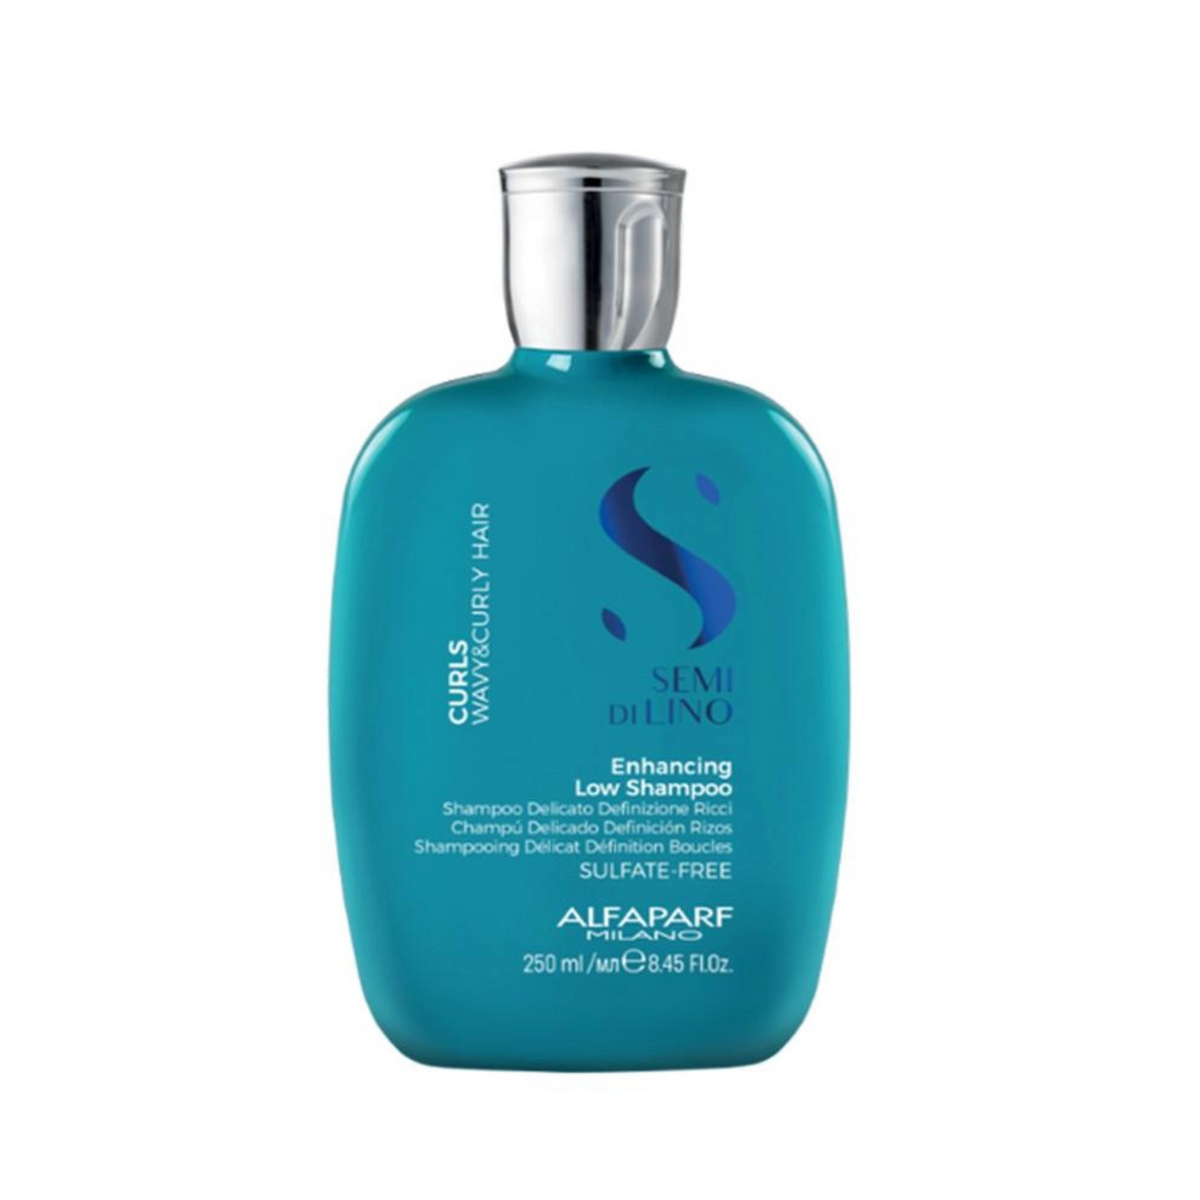 Sampon pentru par cret sau ondulat 250ml Semi di Lino Curls Enhancing Low Shampoo - Alfaparf